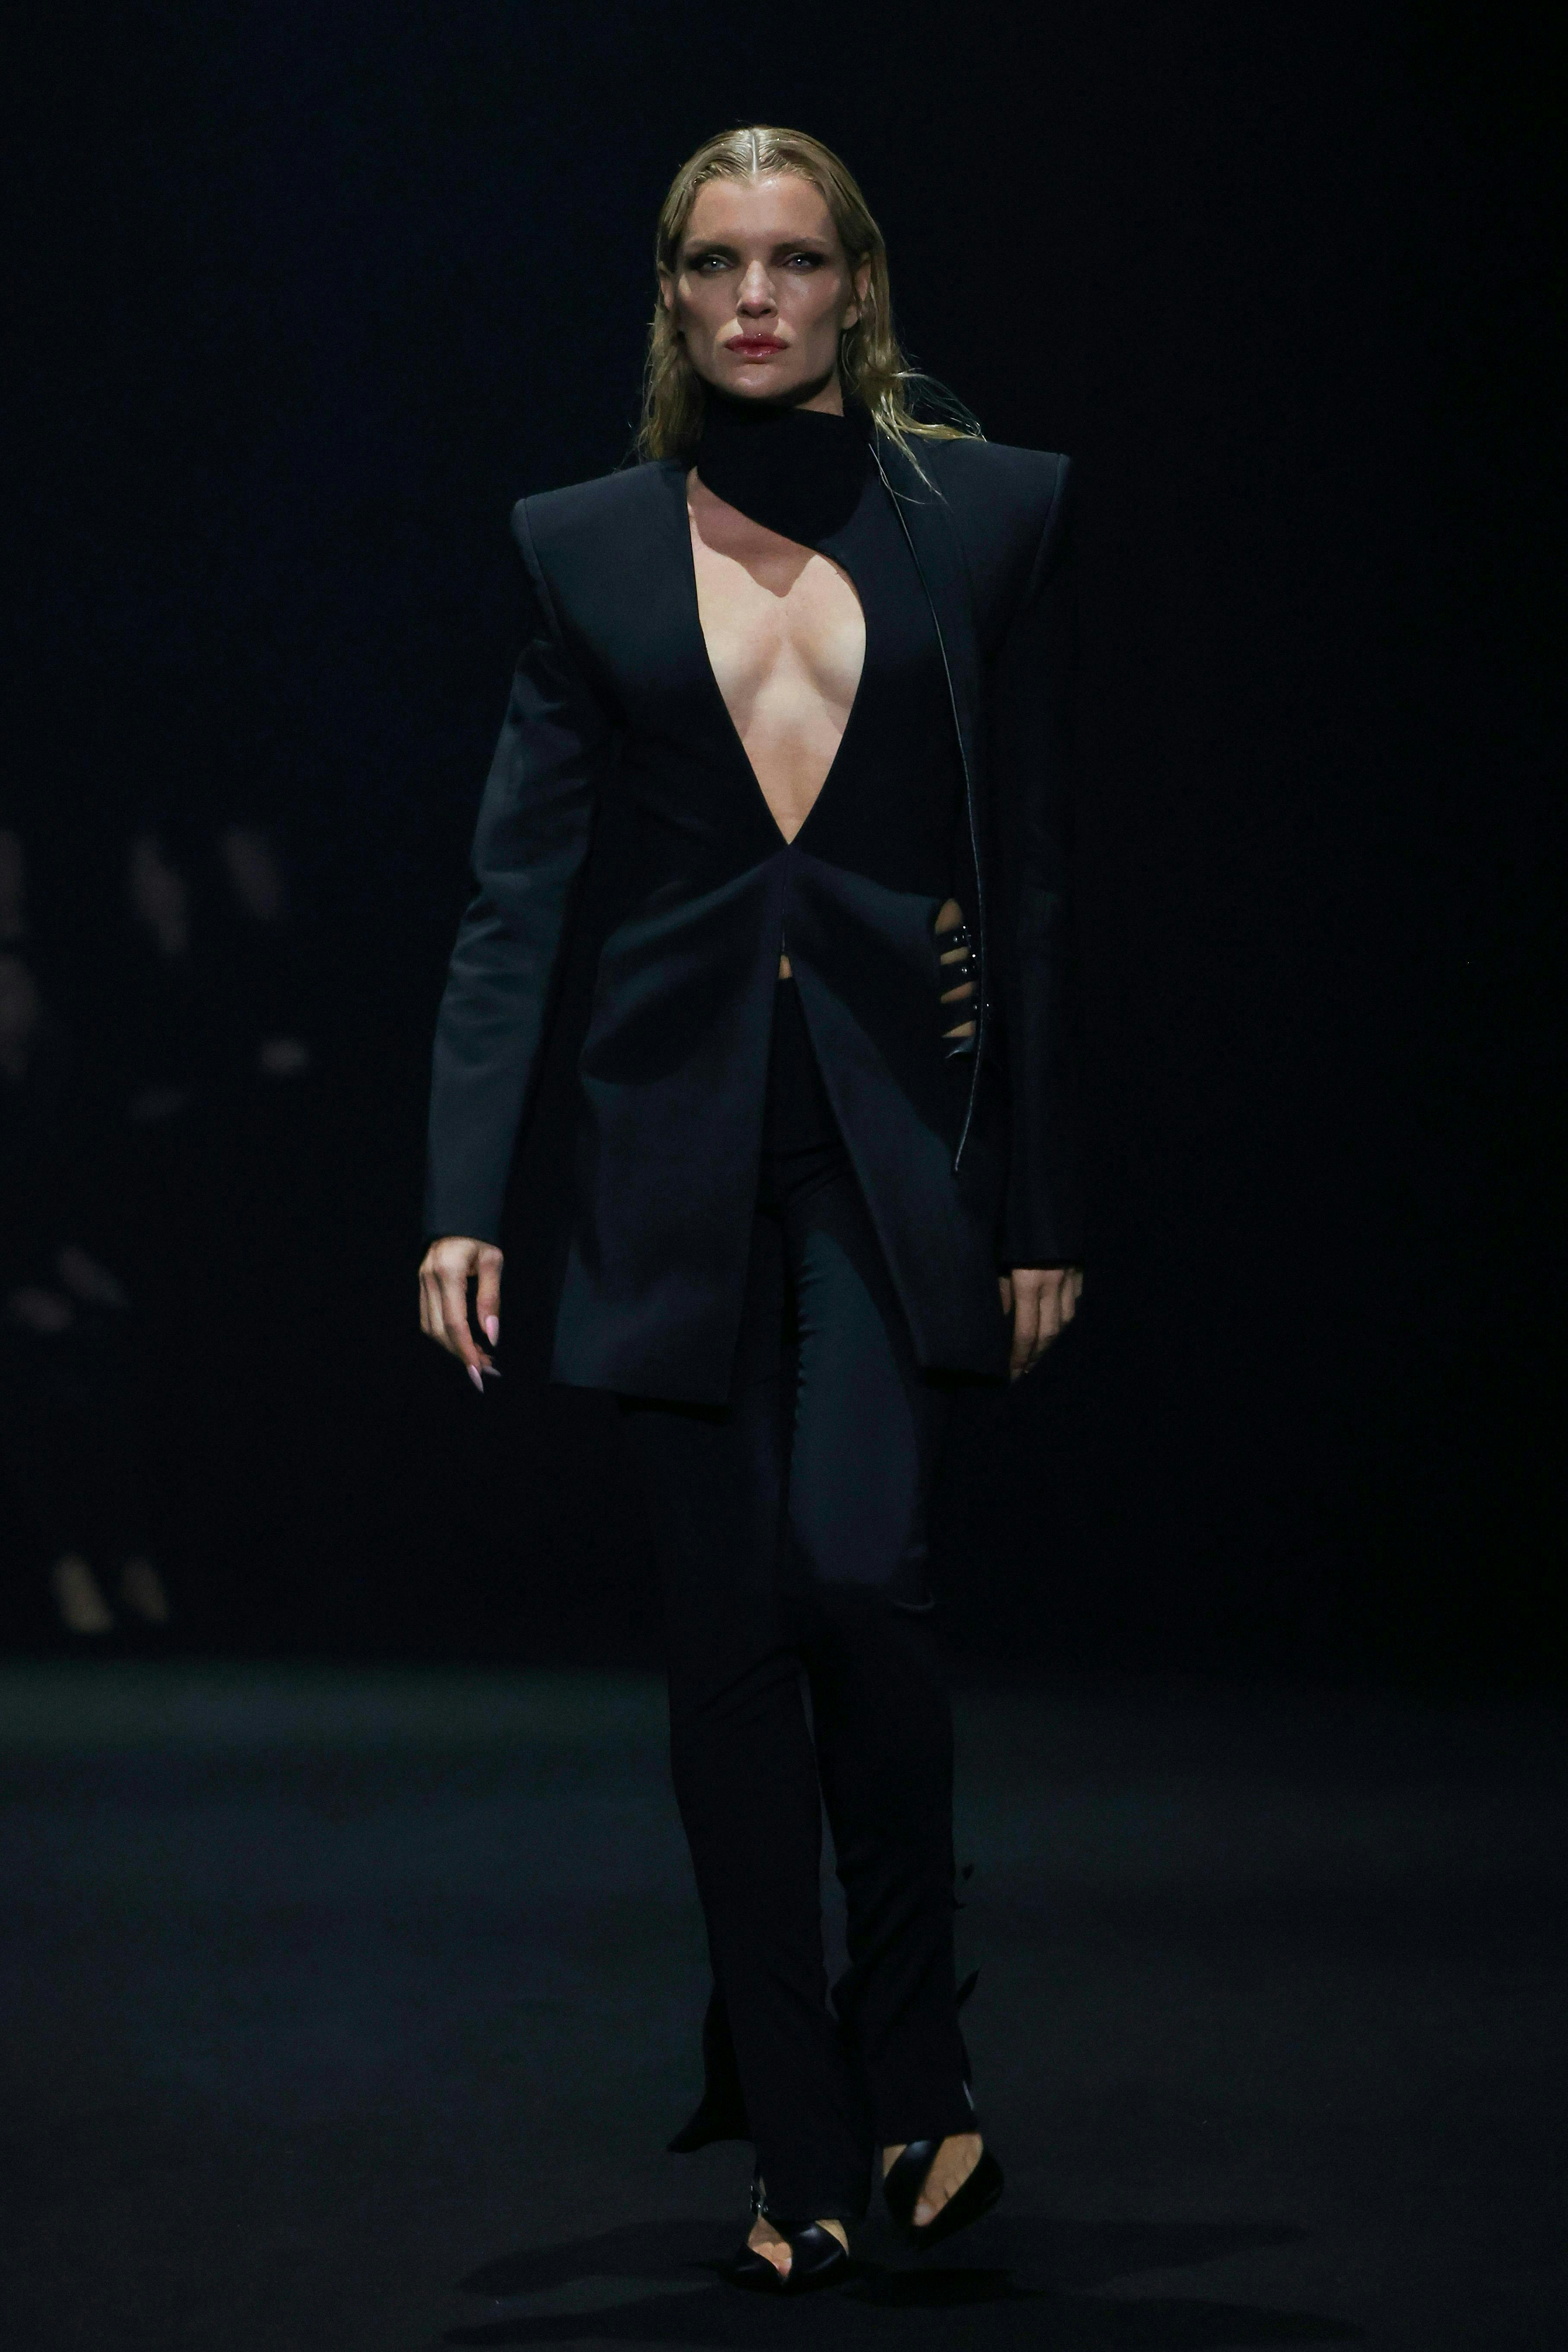 paris formal wear suit fashion coat adult male man person ring jacket